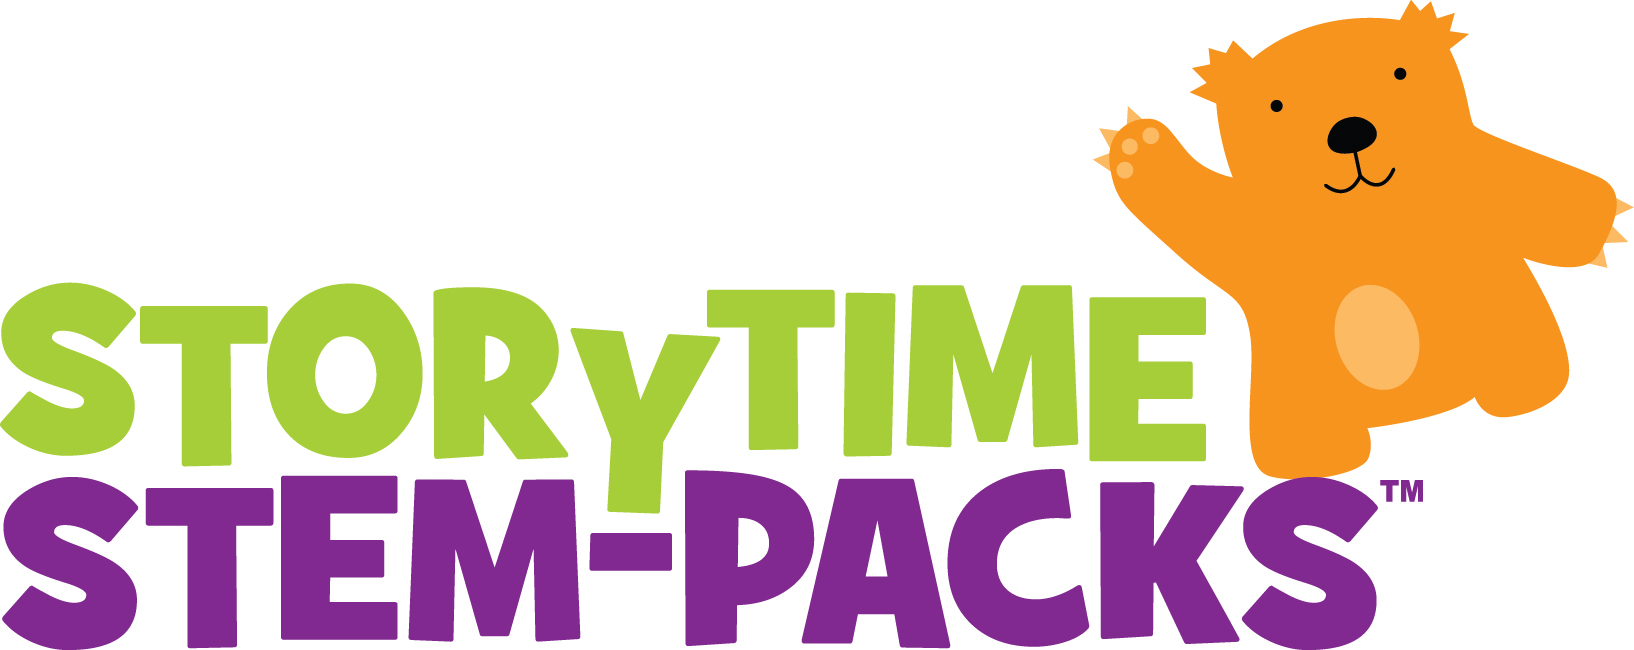 Storytime STEM Packs logo